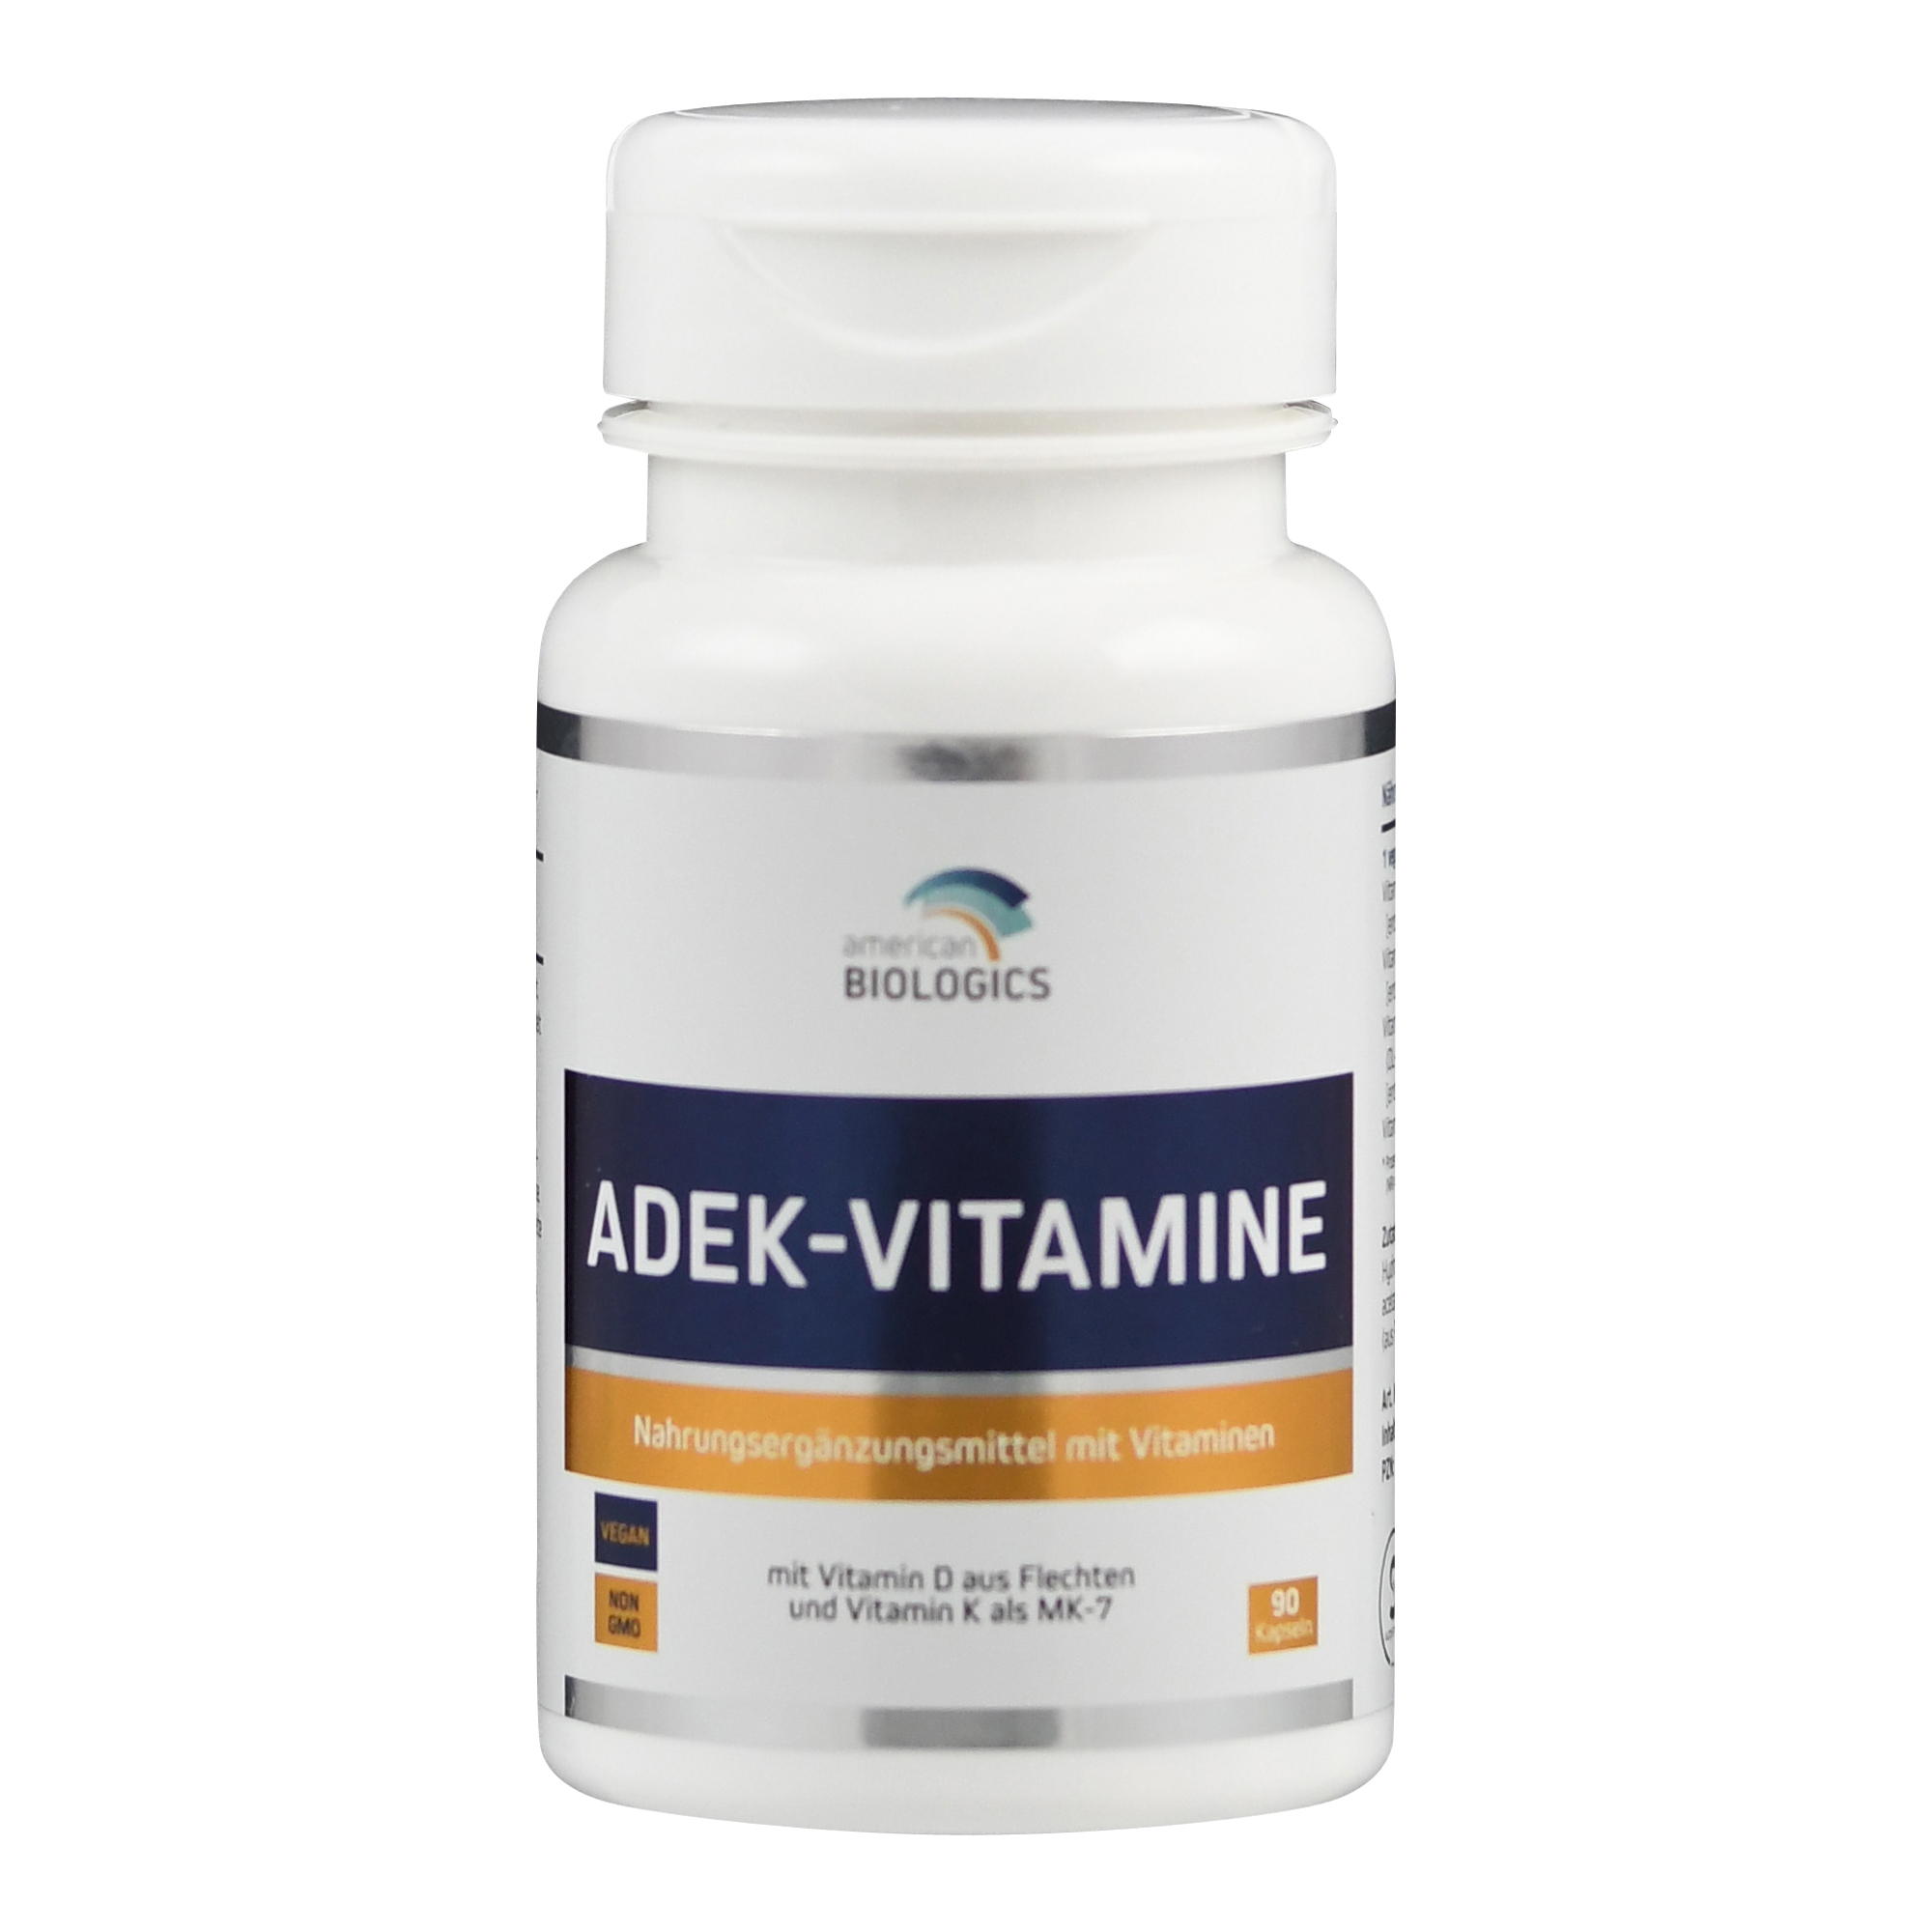 ADEK-Vitamine von American Biologics.